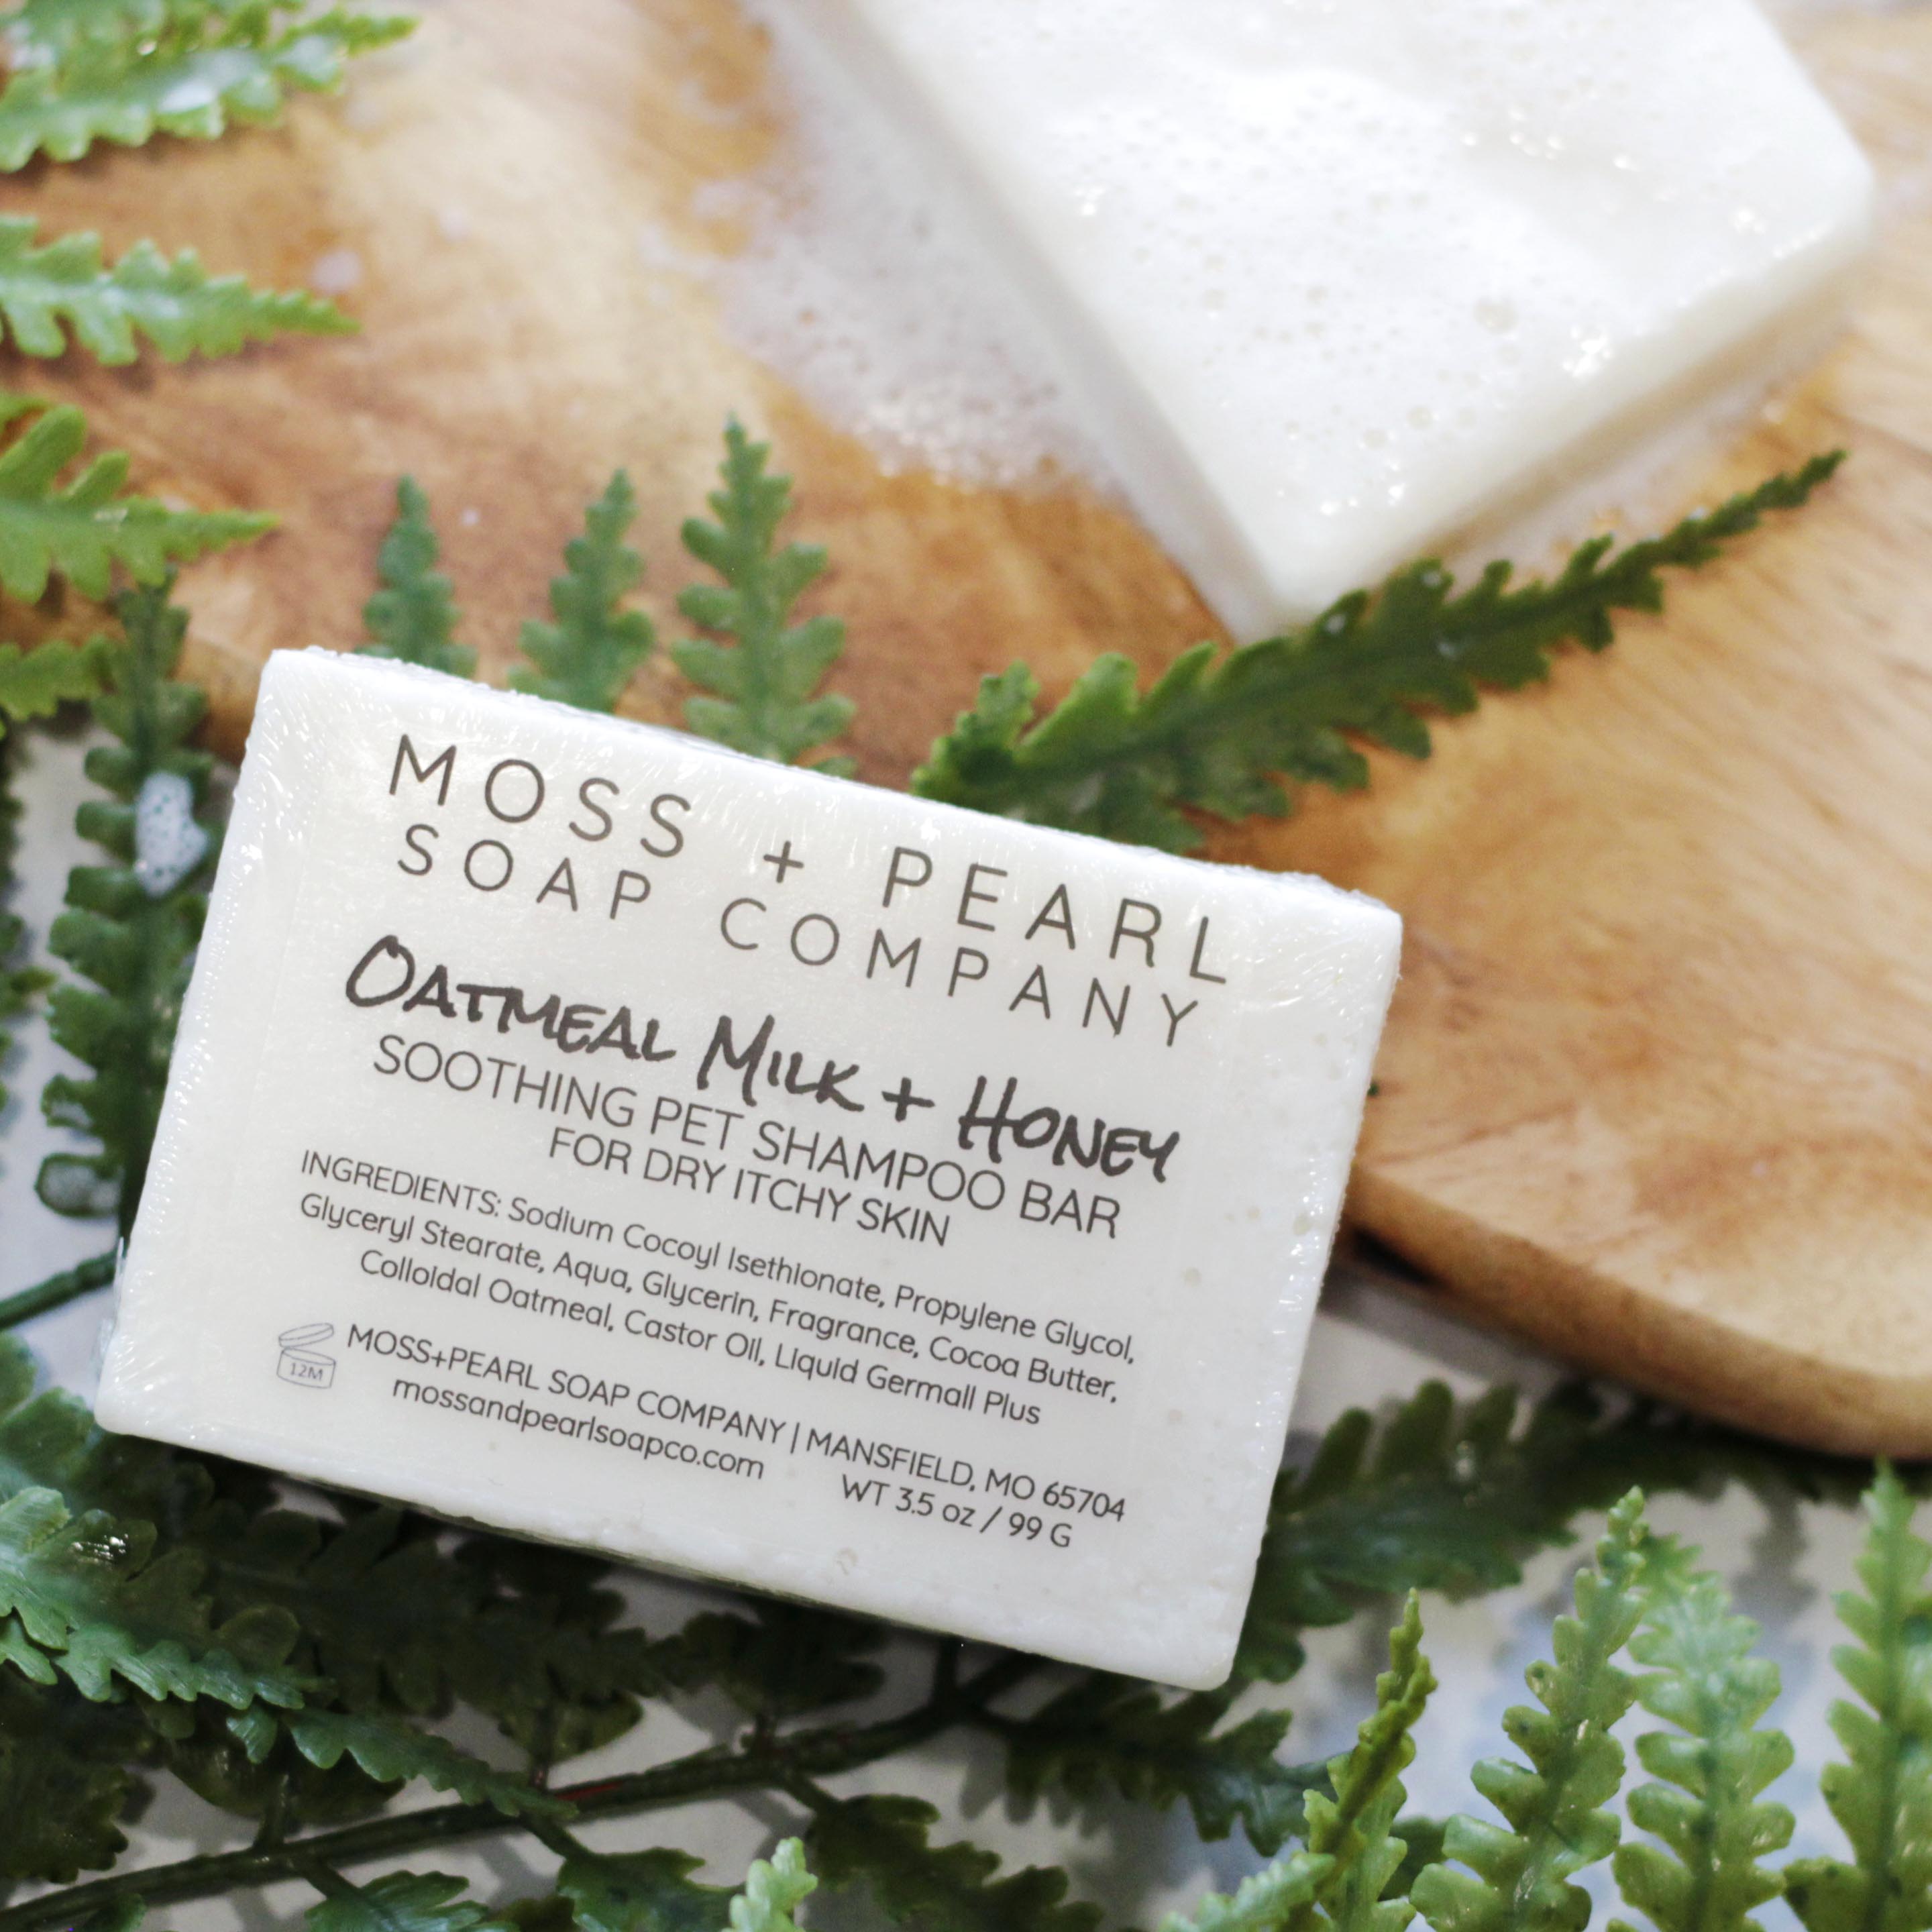 OATMEAL MILK + HONEY PET SHAMPOO BAR Moss + Pearl Soap Company